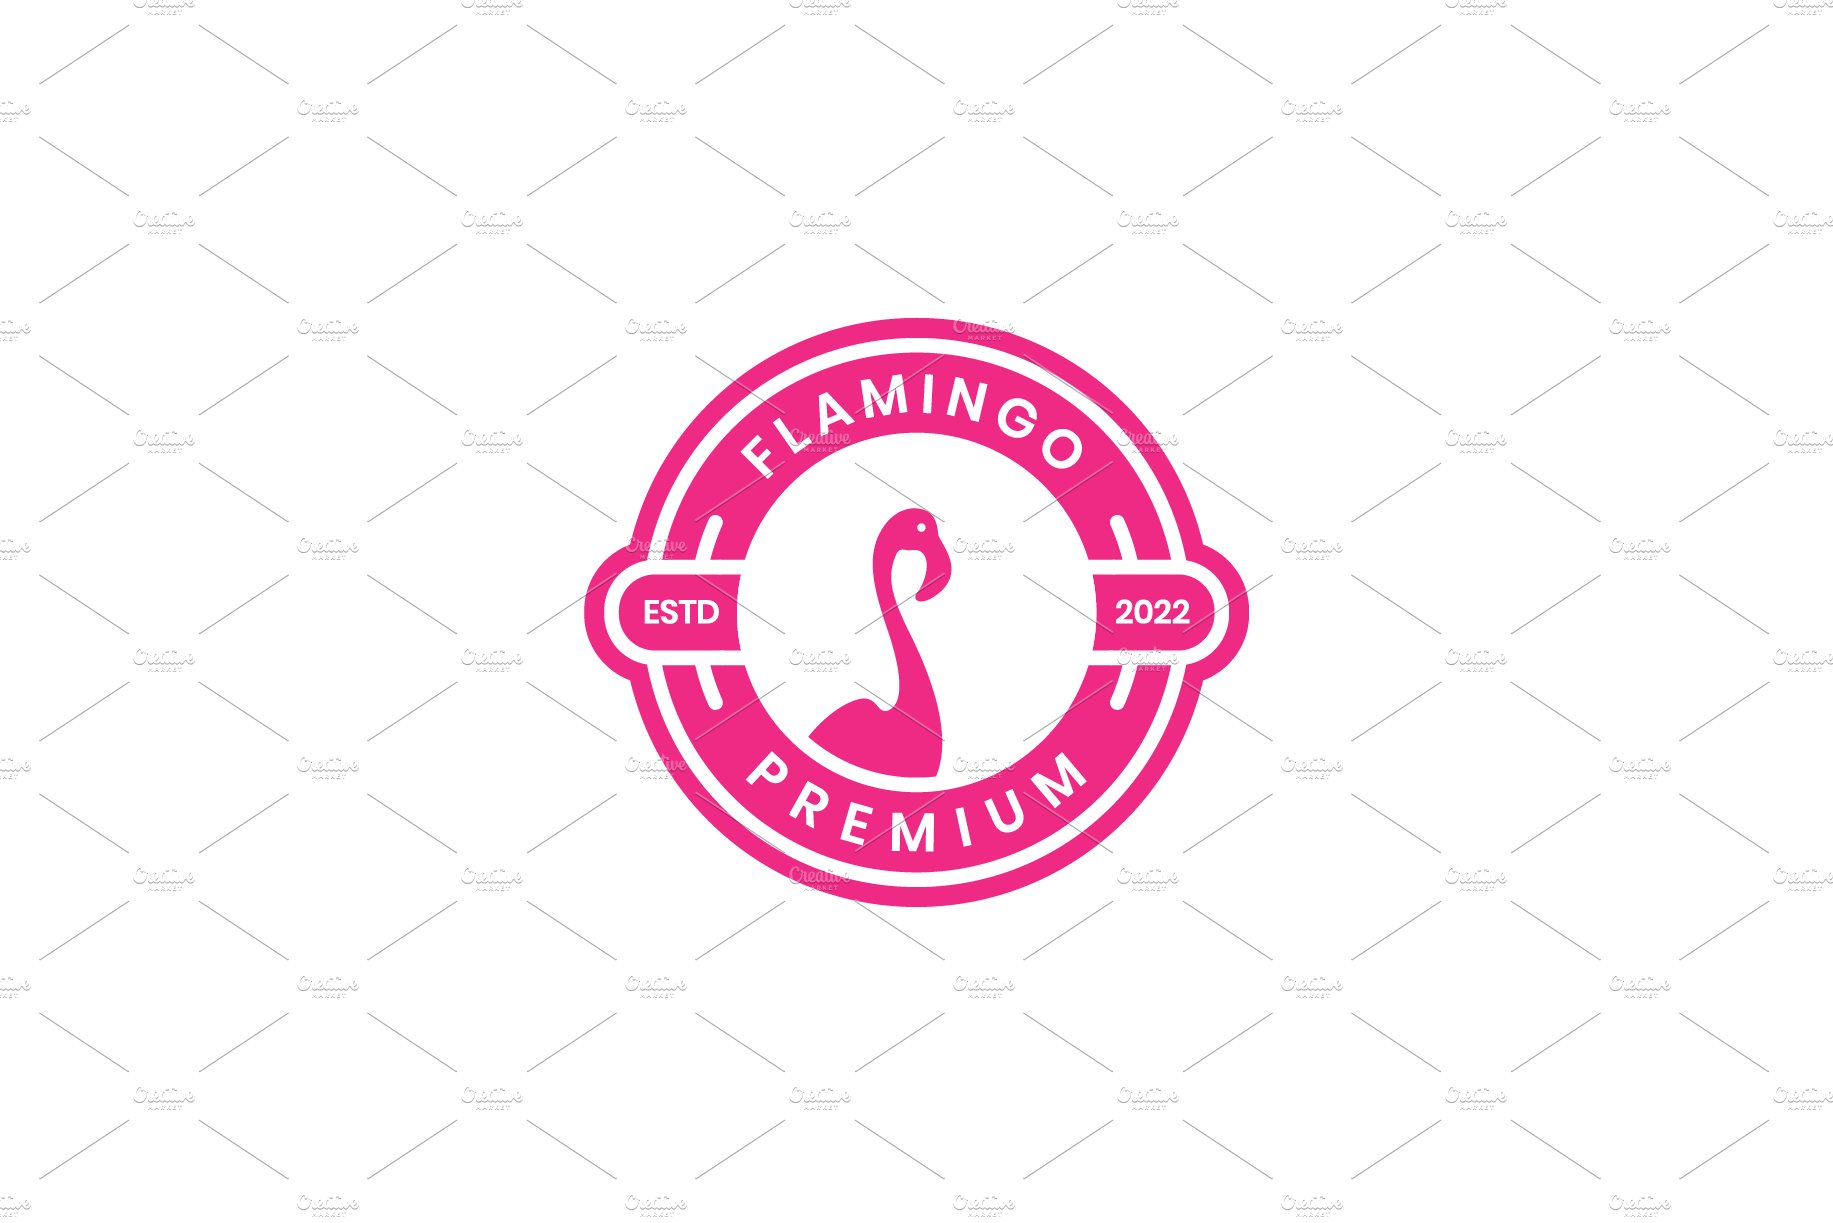 flamingo bird with circle badge logo cover image.